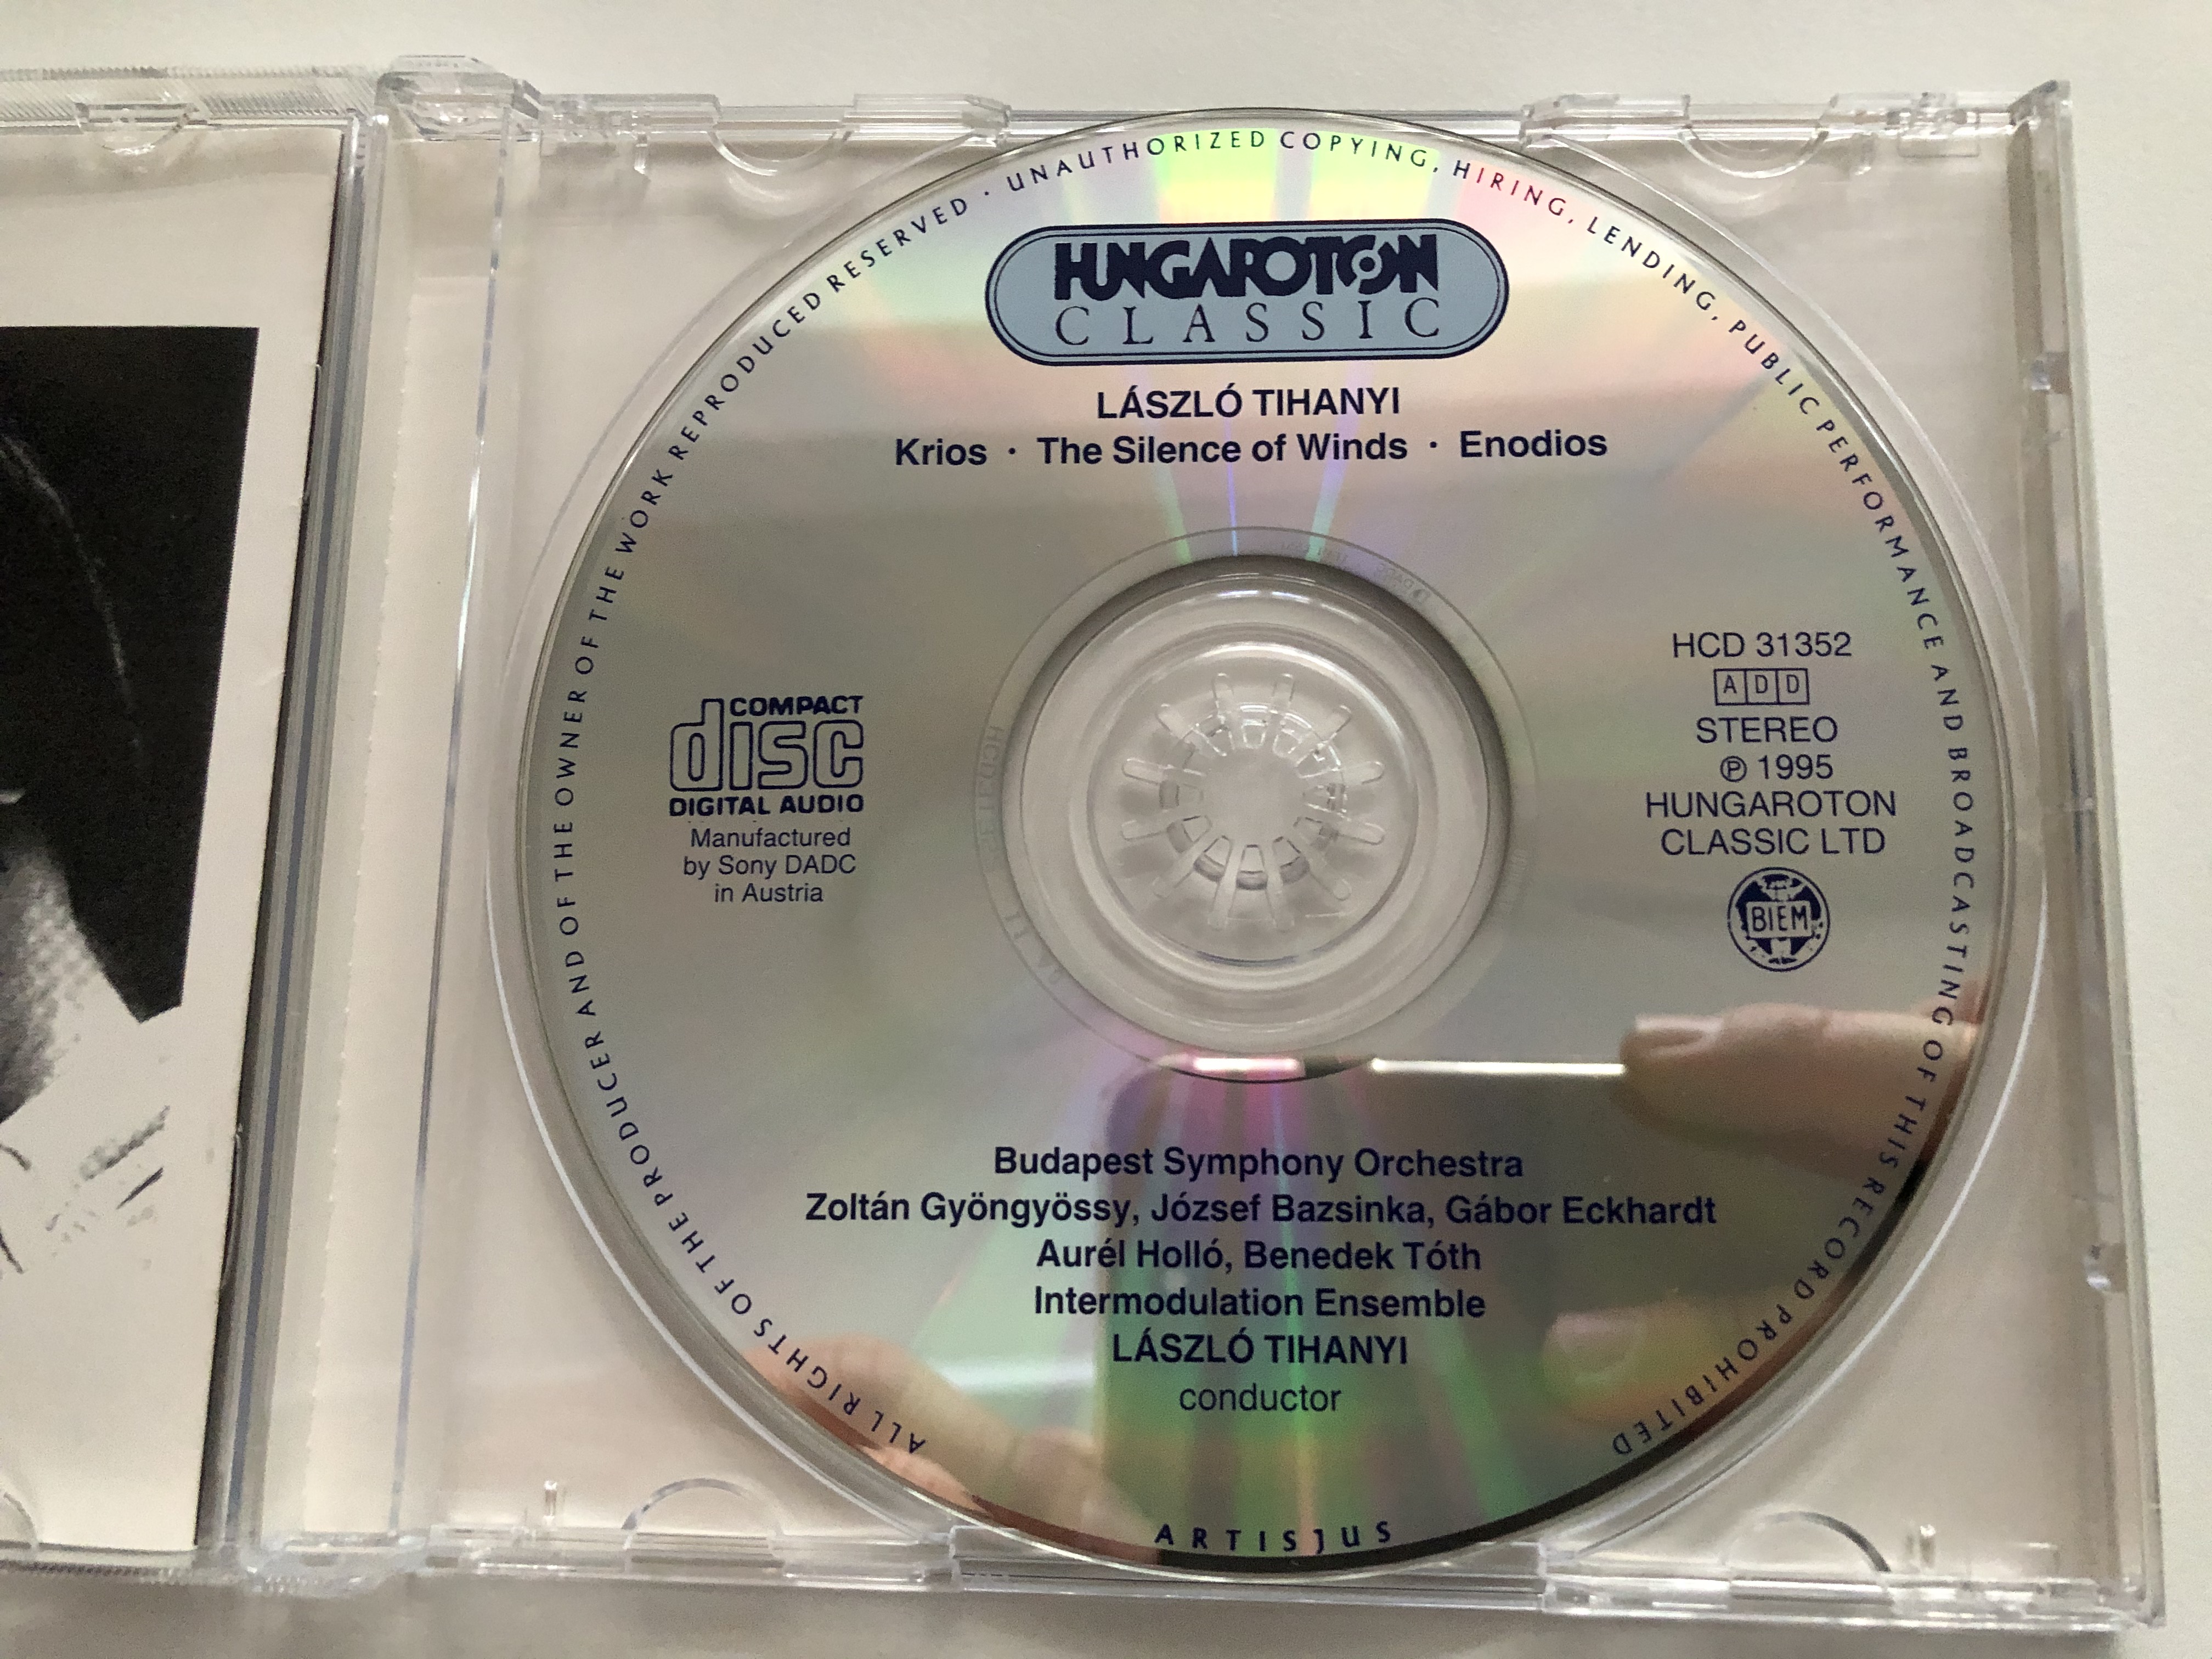 l-szl-tihanyi-krios-enodios-the-silence-of-winds-hungaroton-classic-audio-cd-1995-stereo-hcd-31352-6-.jpg